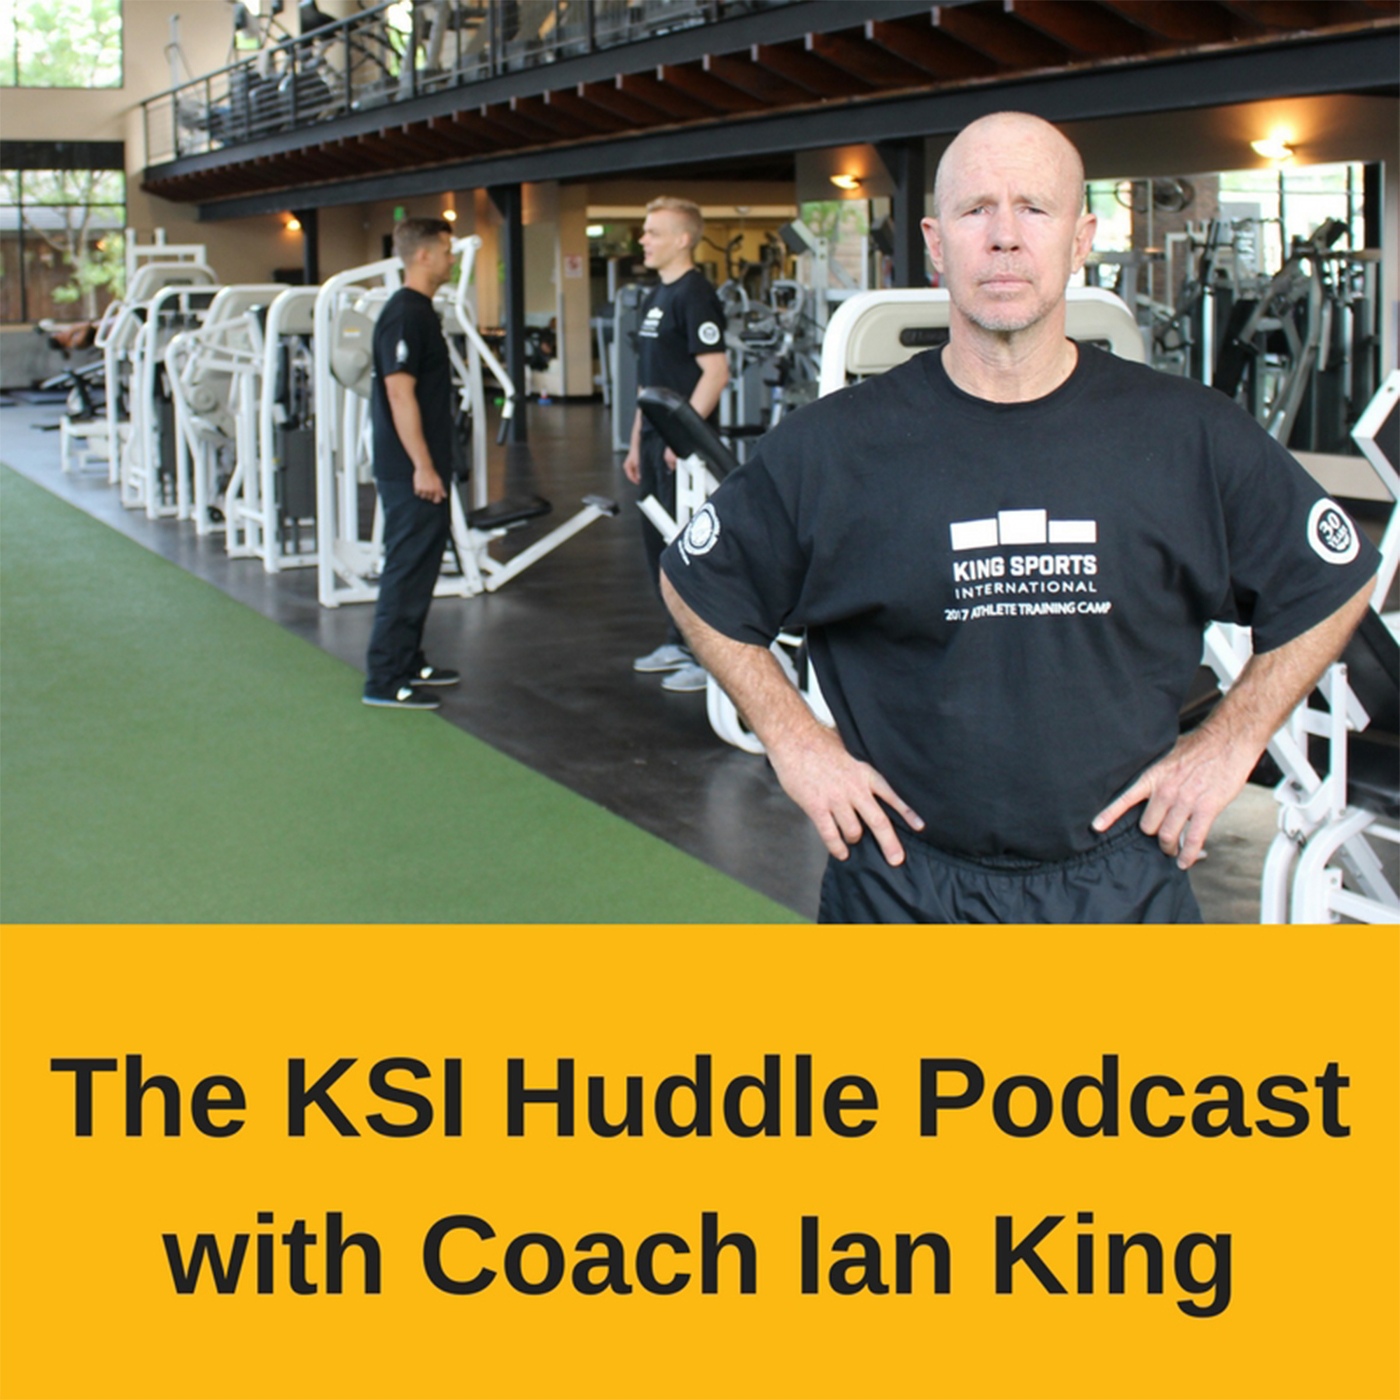 The KSI Huddle Podcast with Coach Ian King